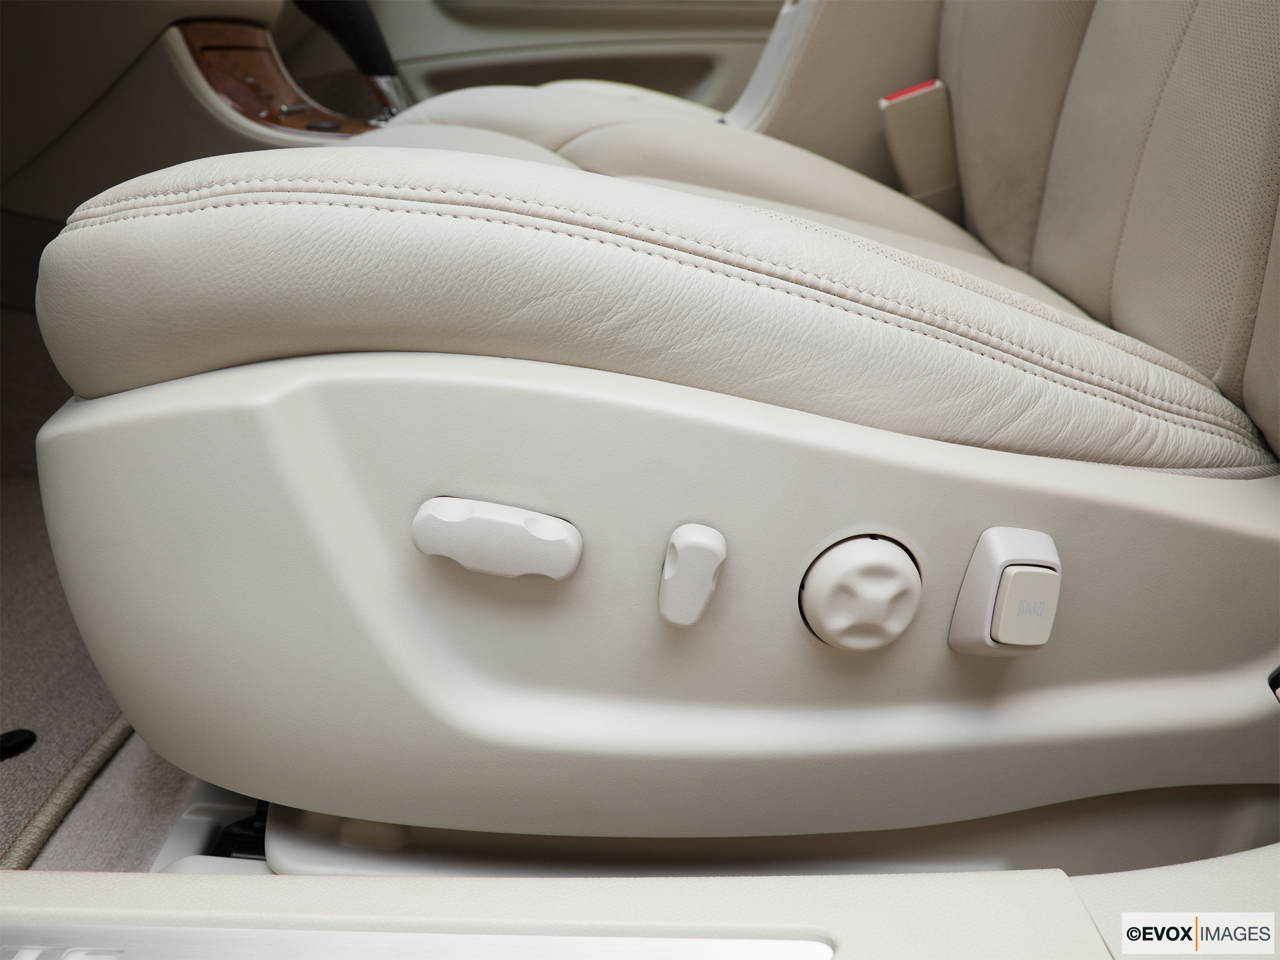 2011 Cadillac DTS Platinum Seat Adjustment Controllers. 